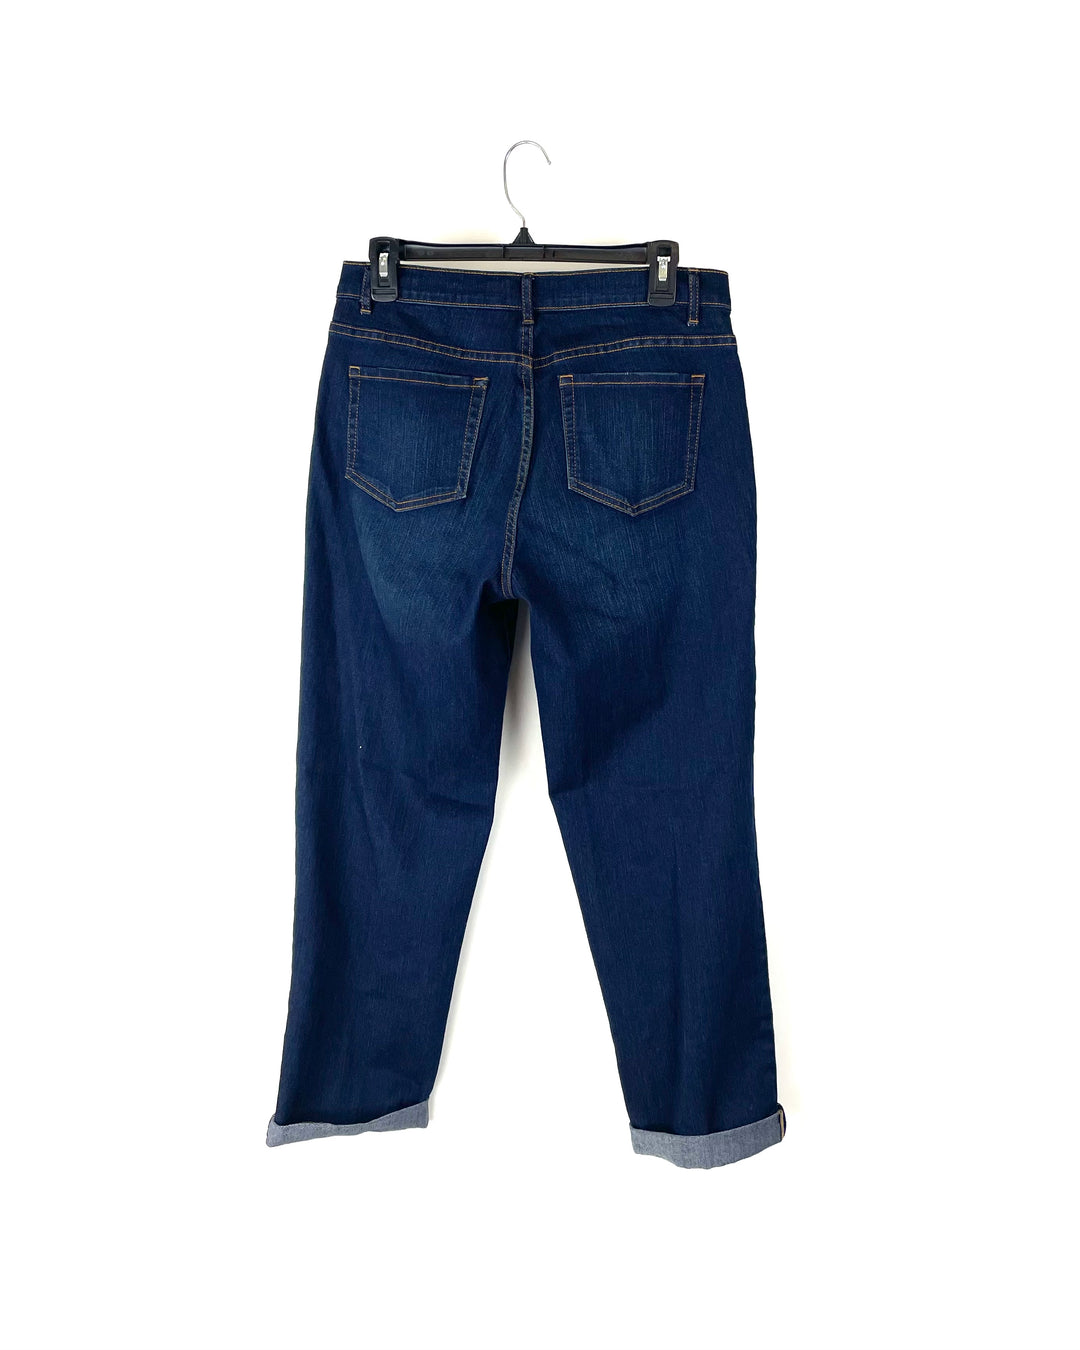 Dark Wash Curvy Capri Denim Jeans - Size 8